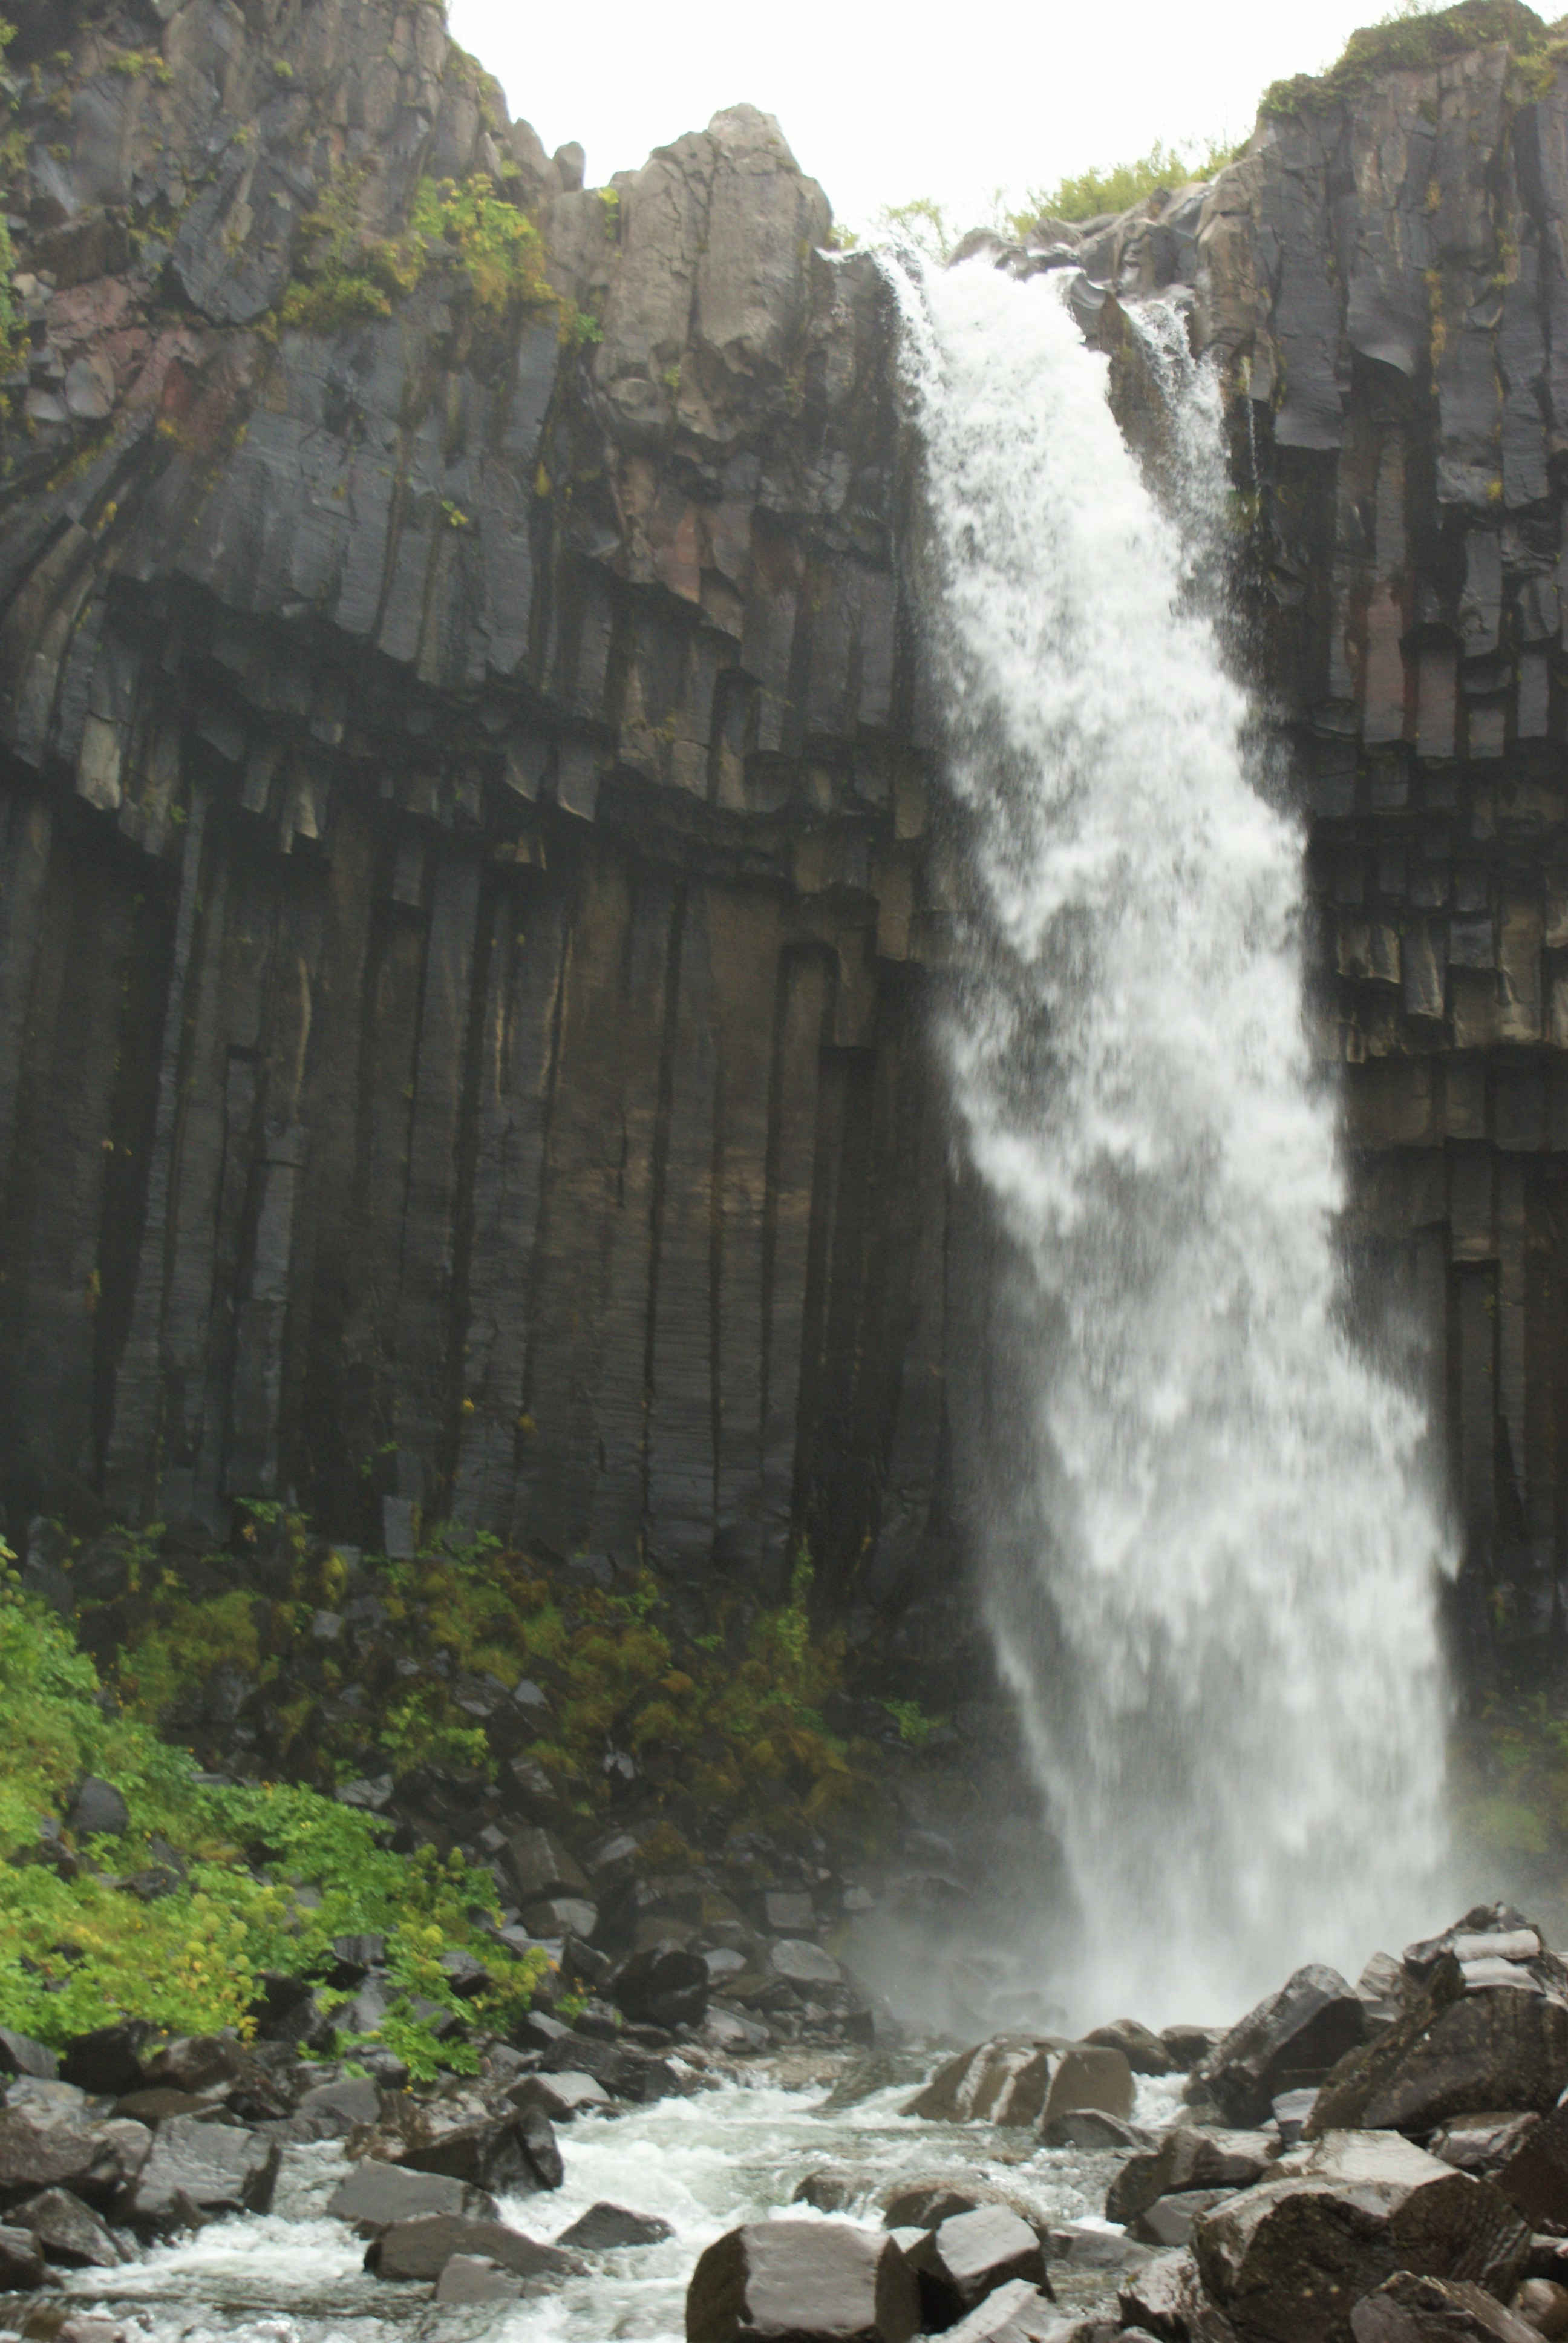 The Black Falls (Svartifoss)